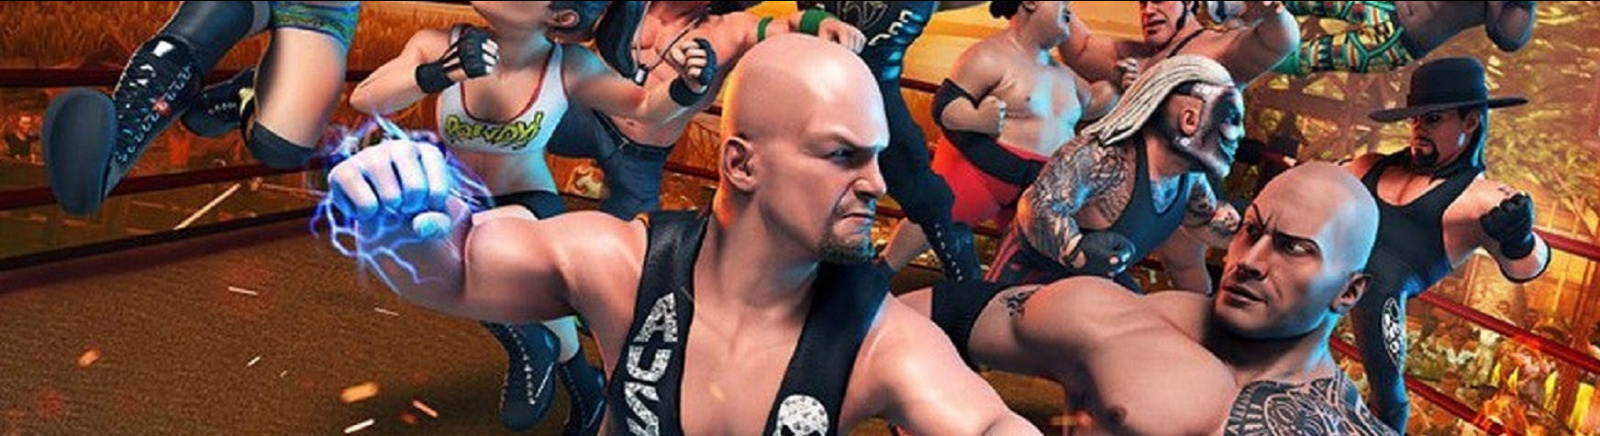 Дата выхода WWE 2K Battlegrounds  на PC, PS4 и Xbox One в России и во всем мире